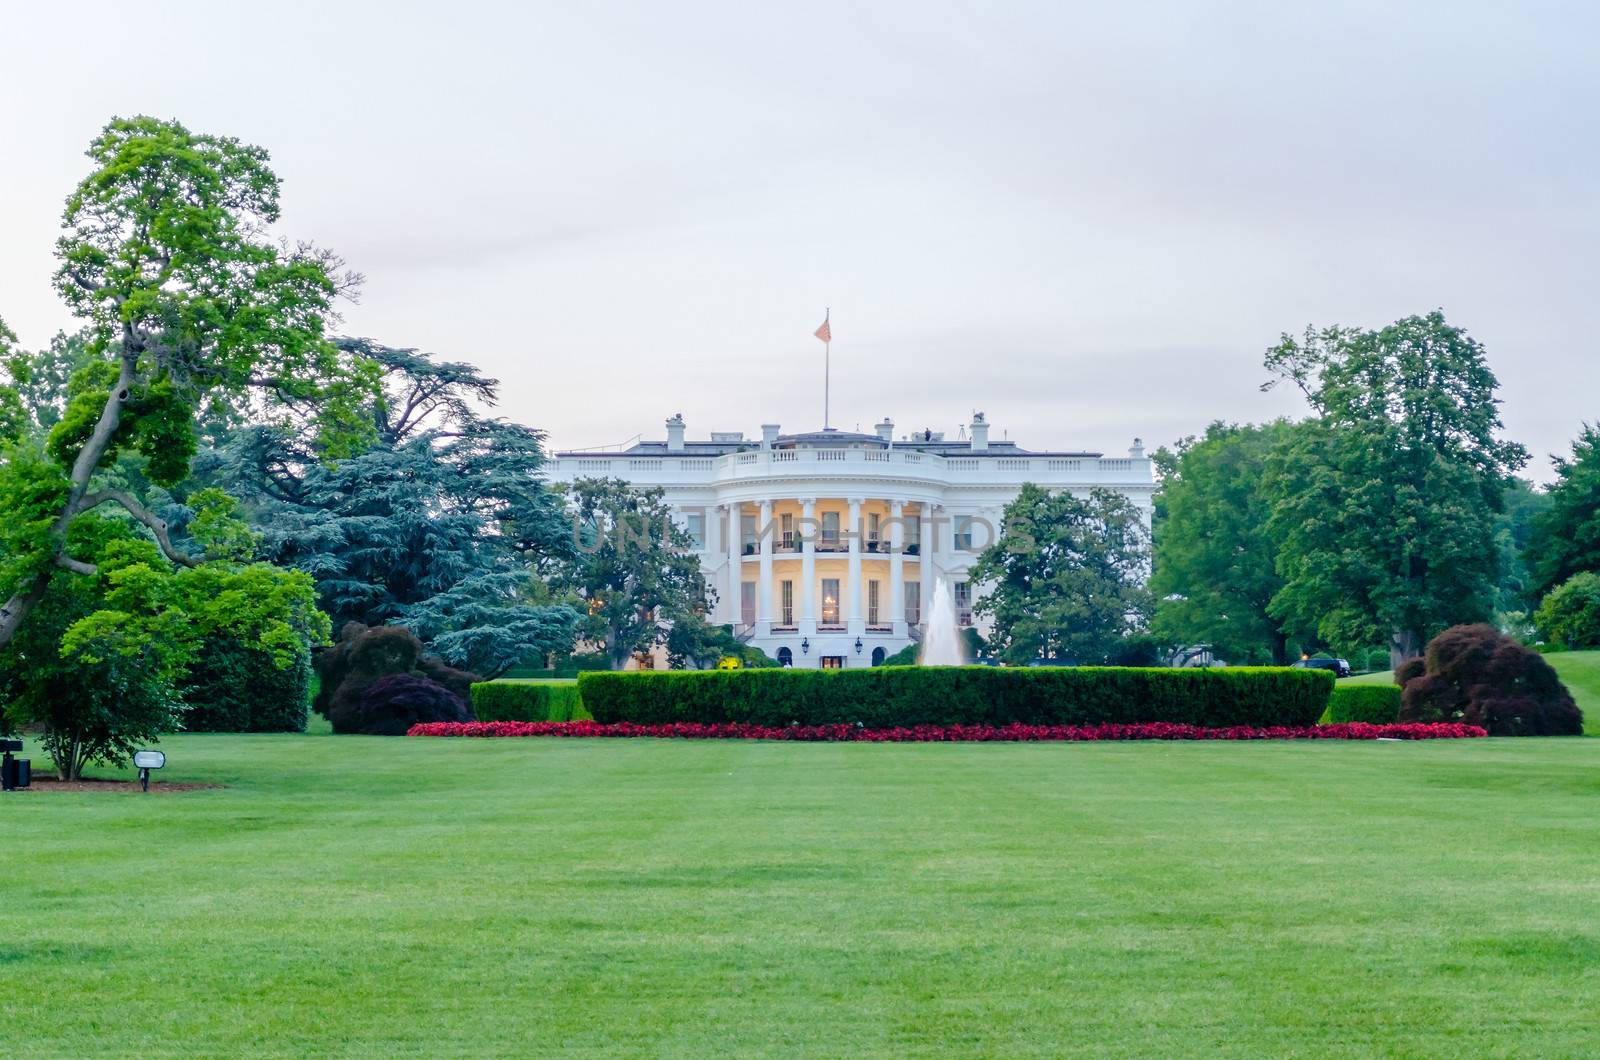 The White House in Washington DC by marcorubino